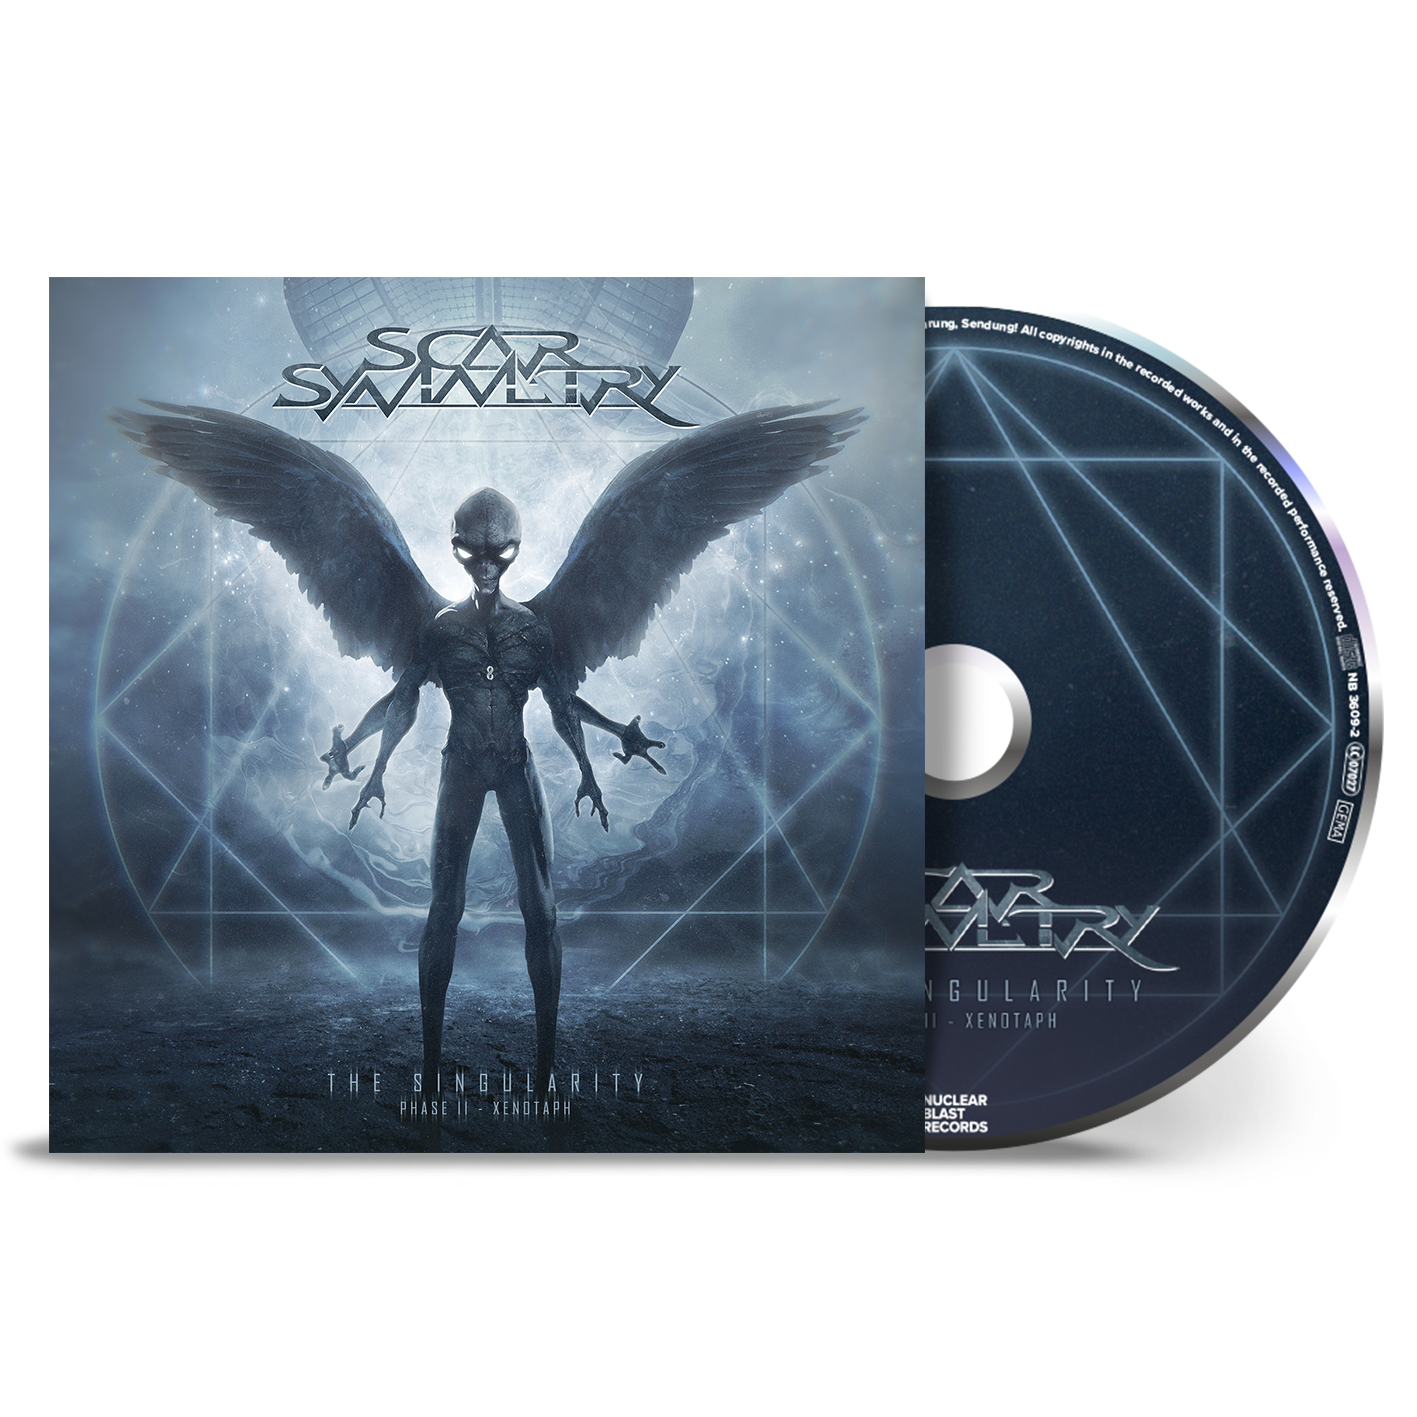 Scar Symmetry - The Singularity (Phase II – Xenotaph): CD